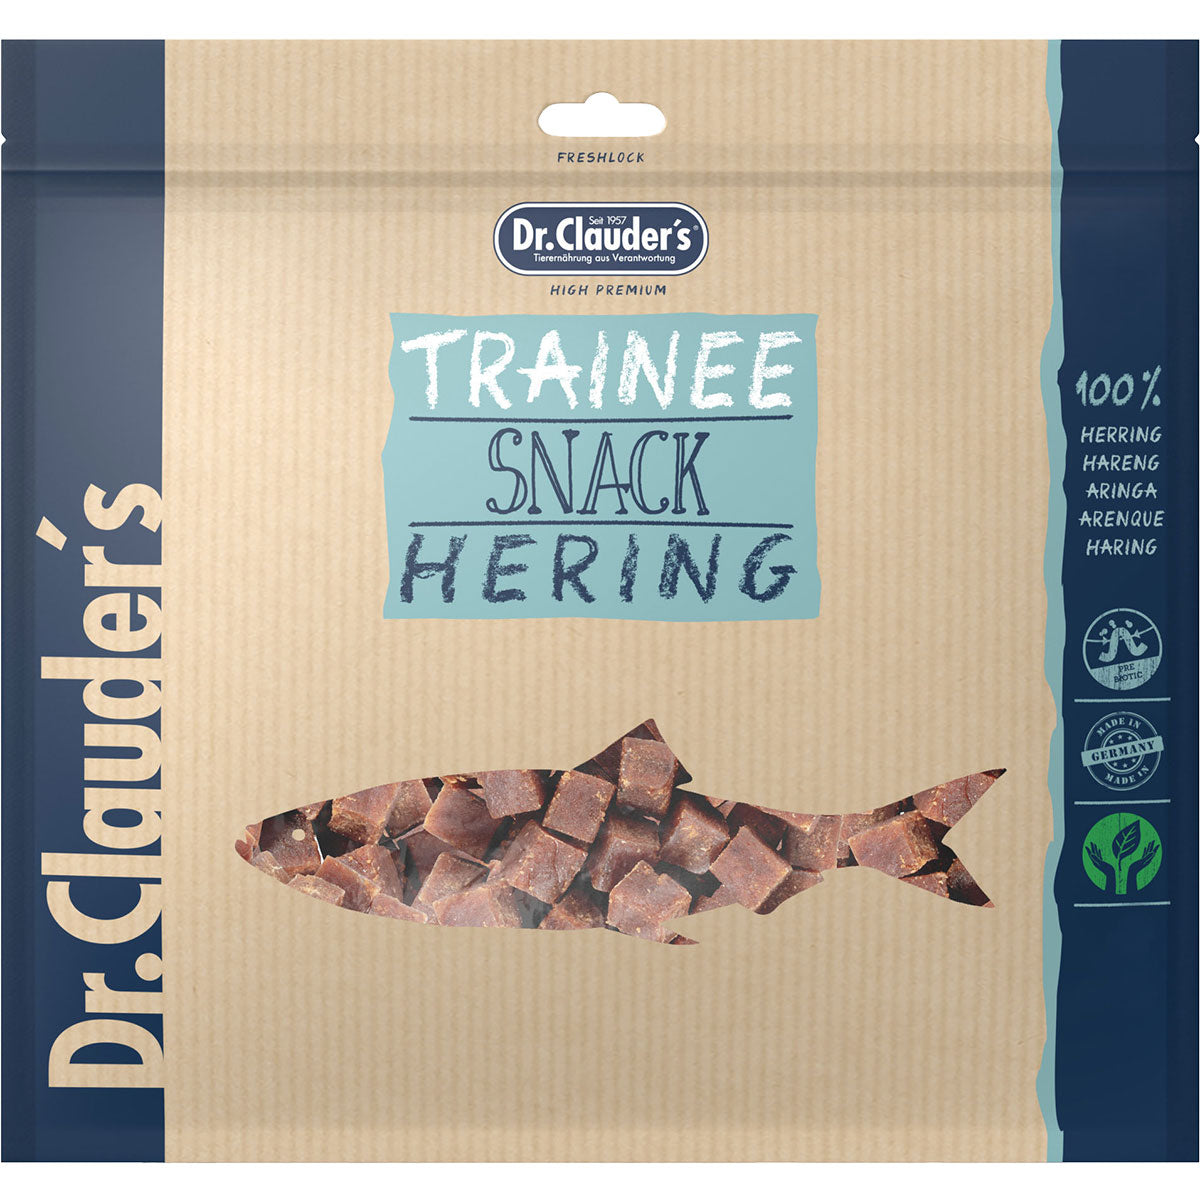 Dr. Clauders Trainee Snack Hering, 500g